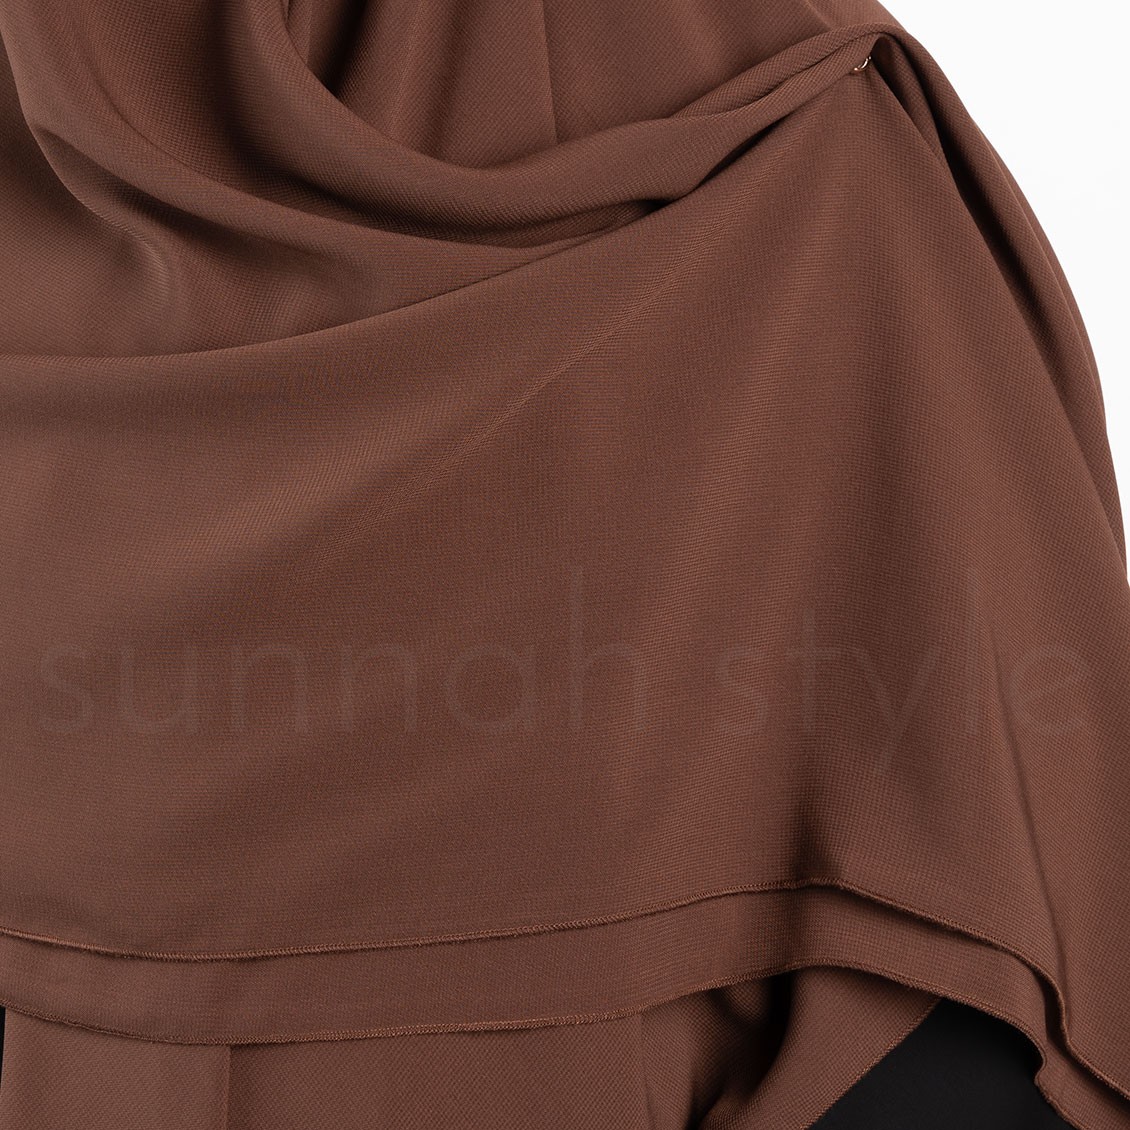 Sunnah Style Essentials Square Hijab Large Pecan